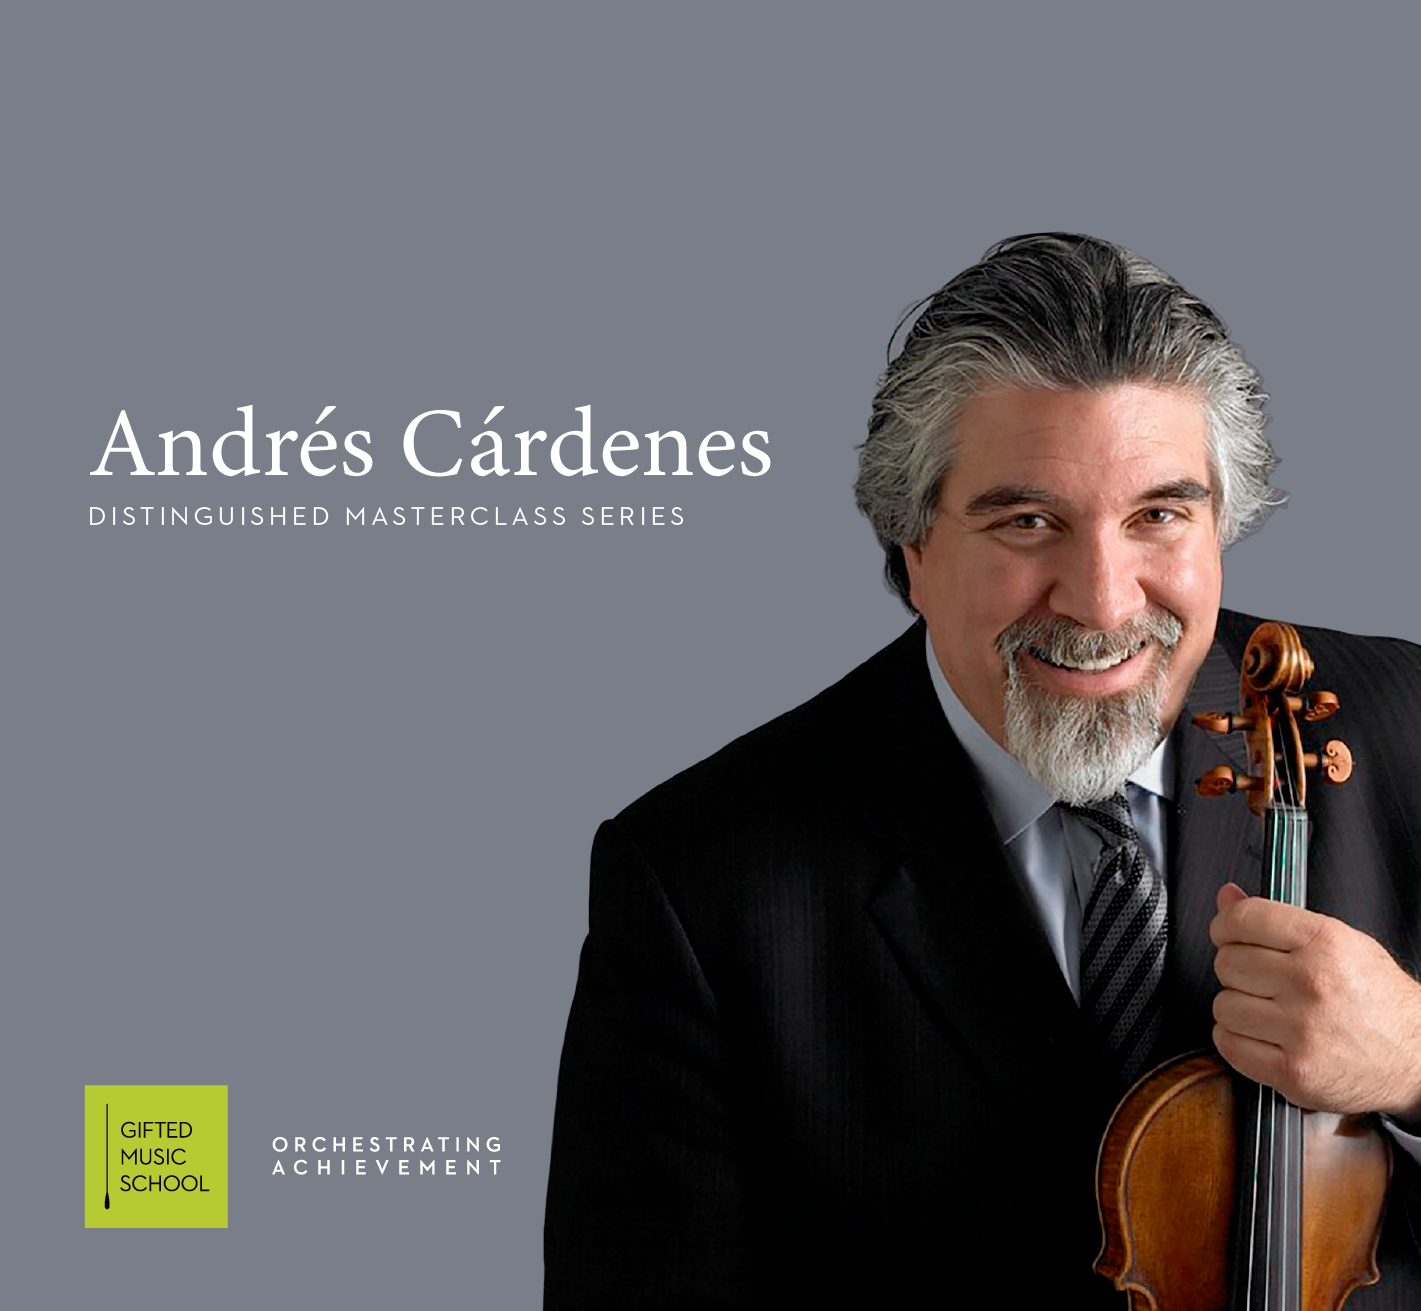 Andres Cardenes violin masterclass image